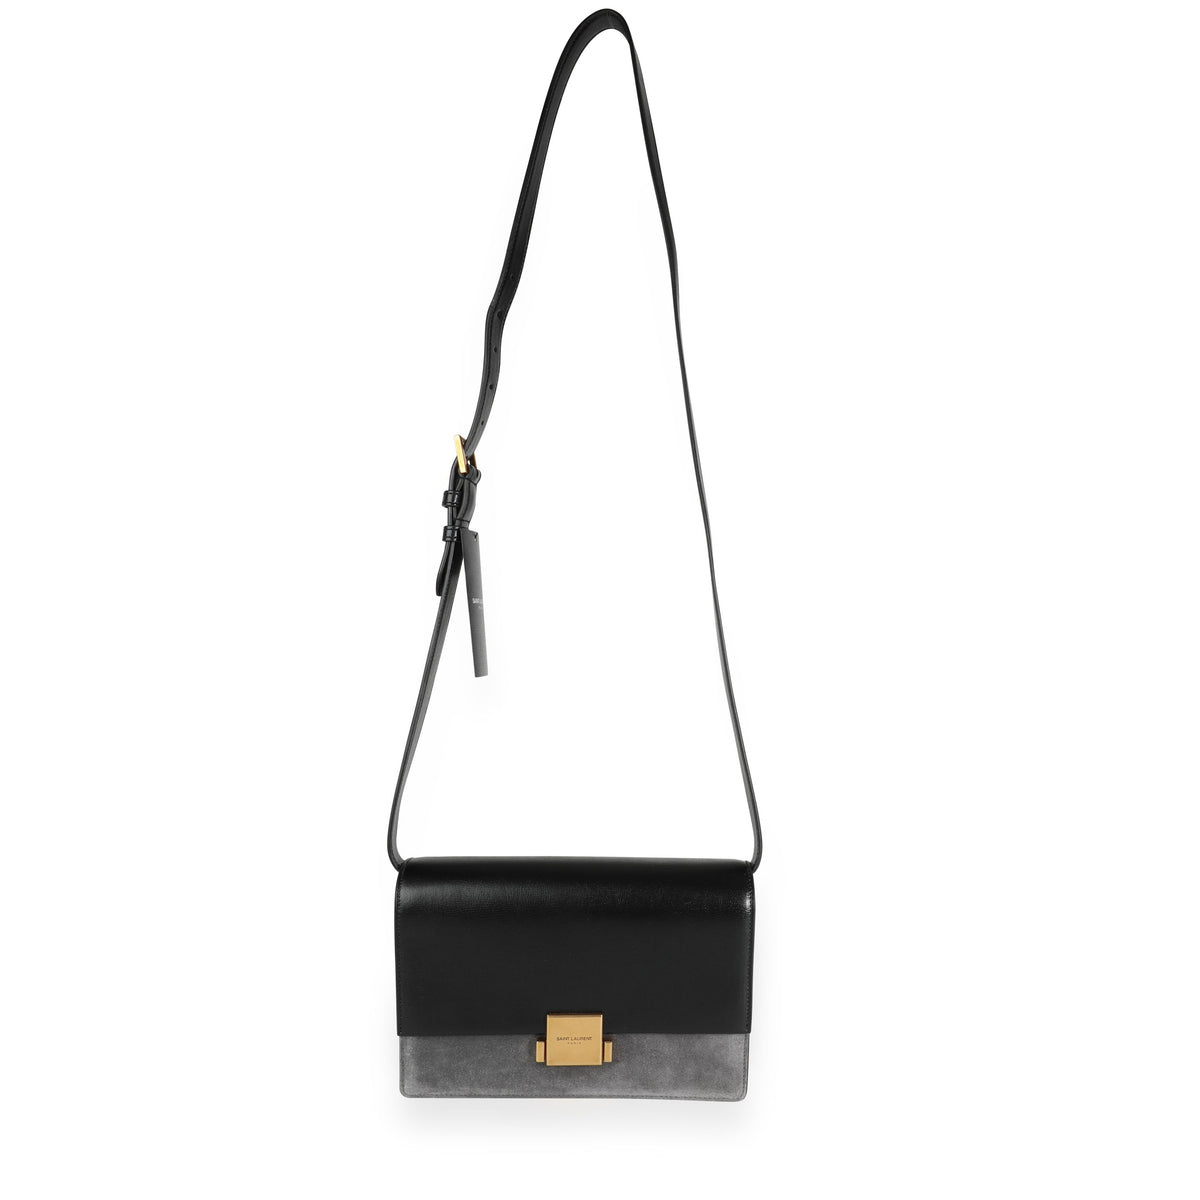 Saint Laurent Black Leather & Gray Suede Bellechasse Medium Shoulder Bag